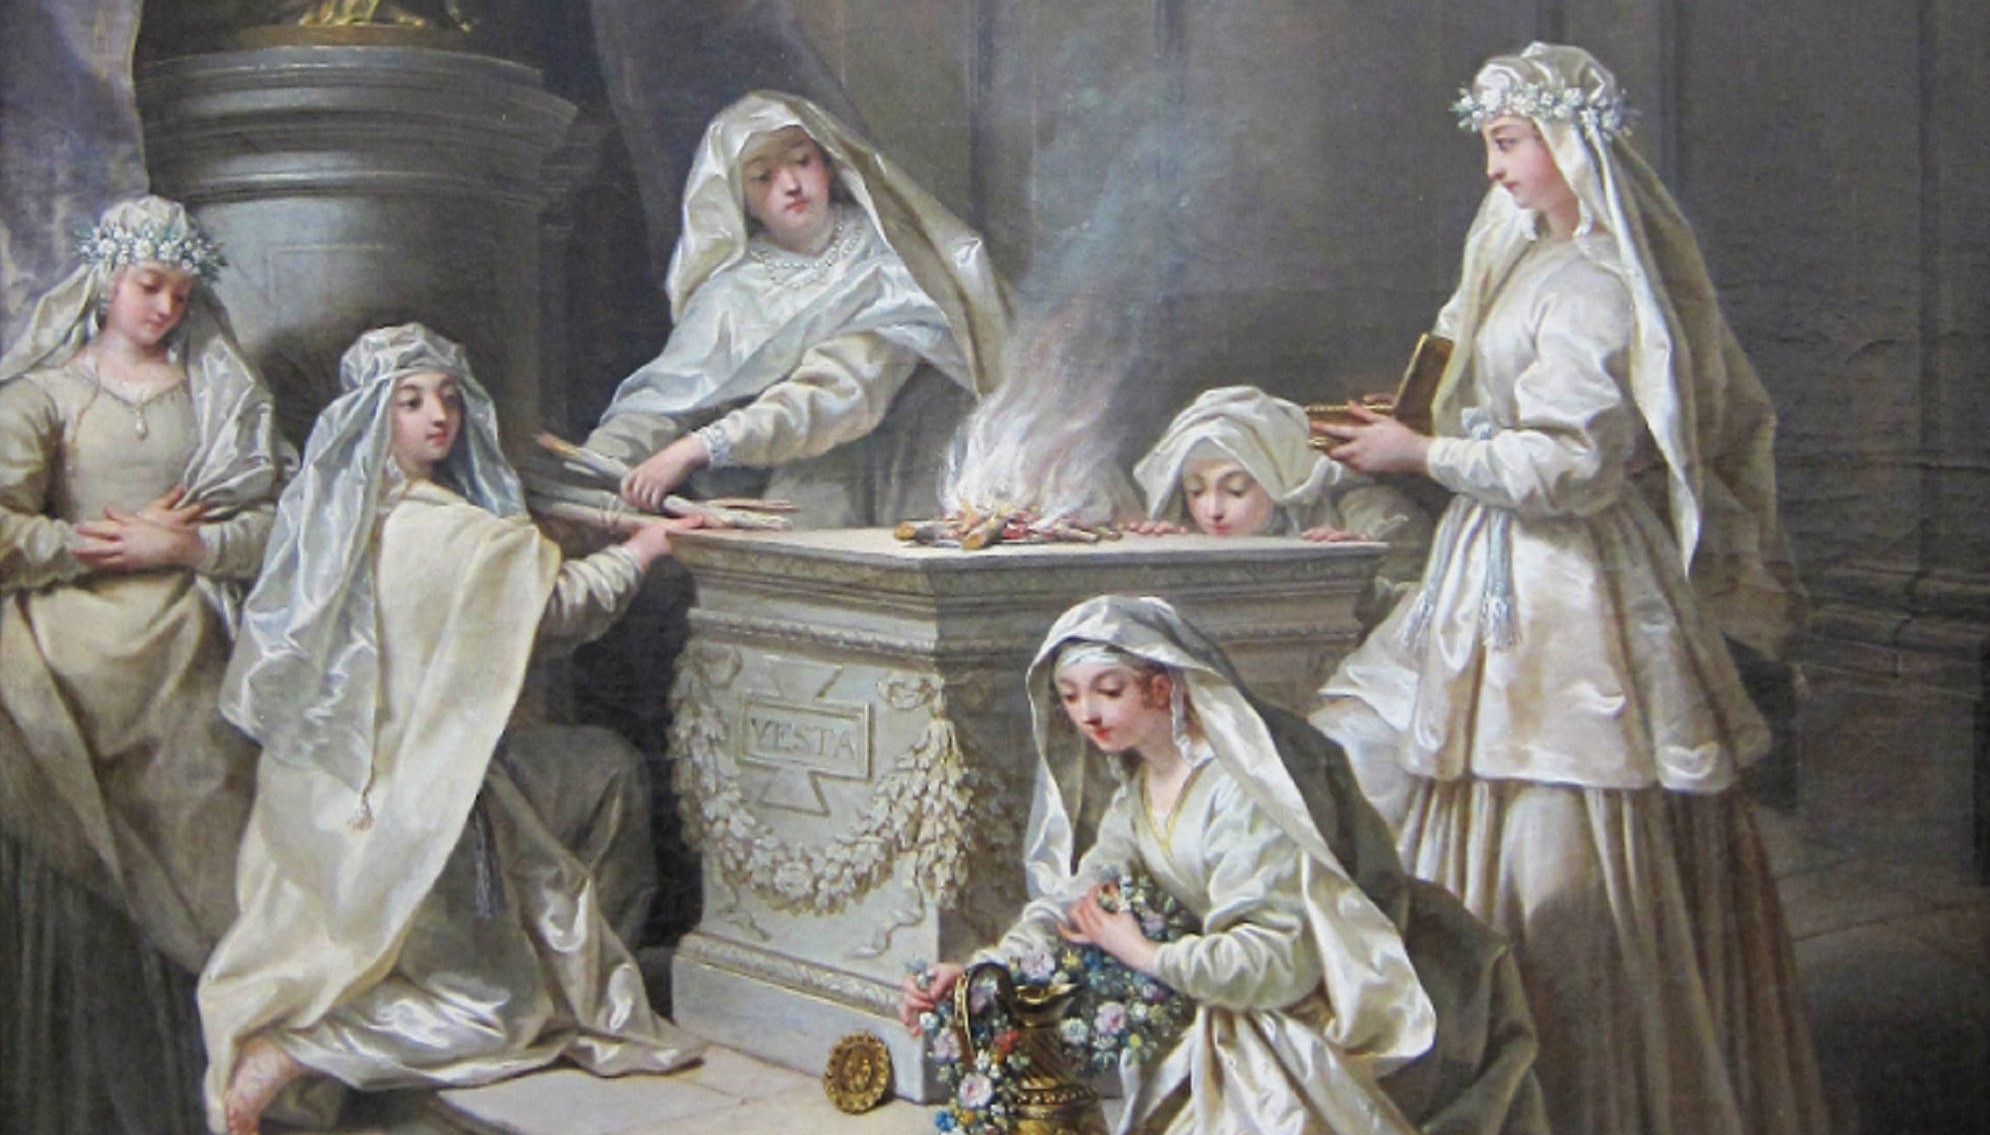 What were the Duties of the Vestal Virgins?